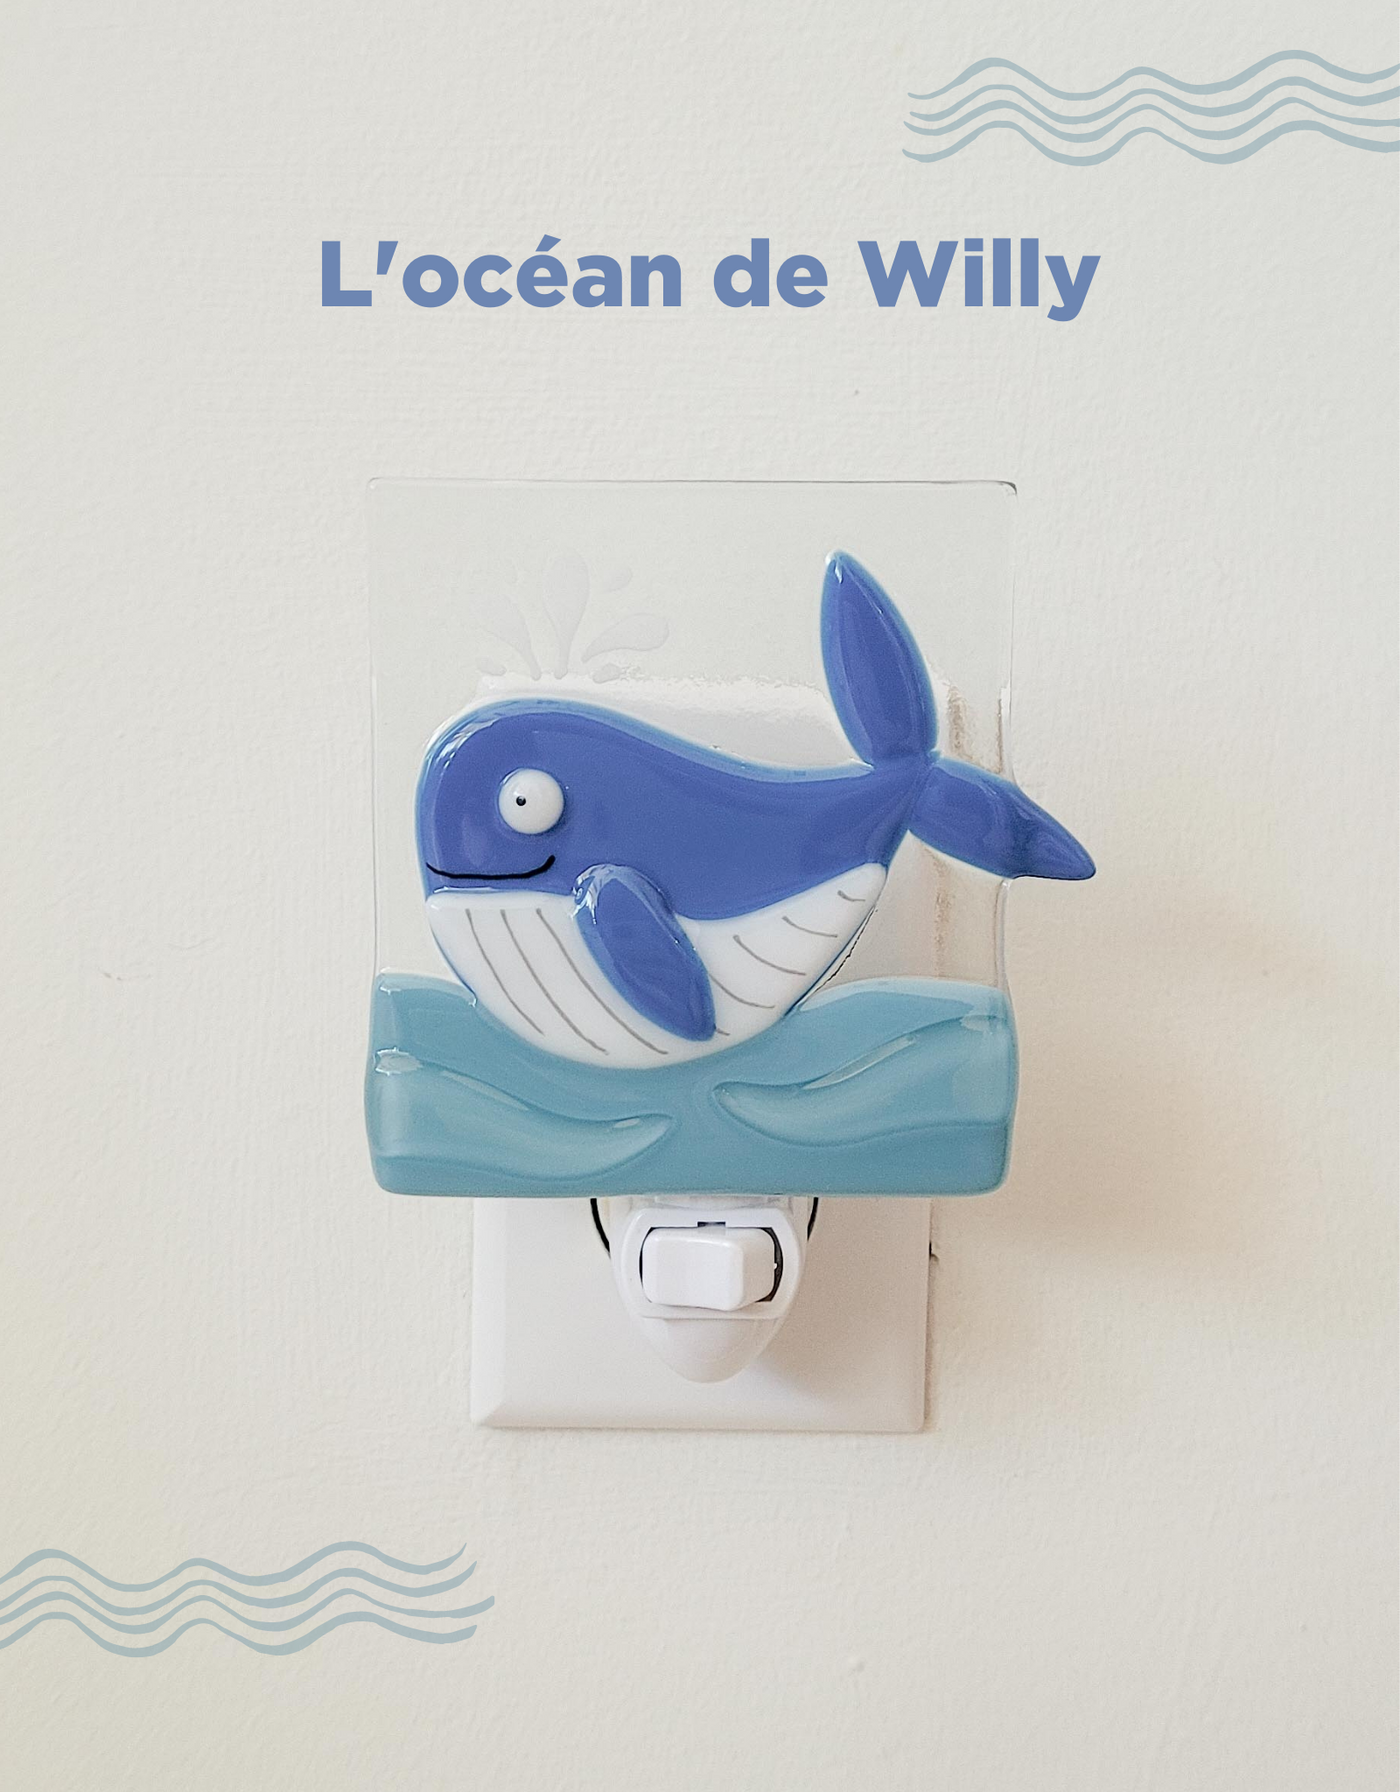 Veilleuse - L'océan de Willy - Veille sur toi